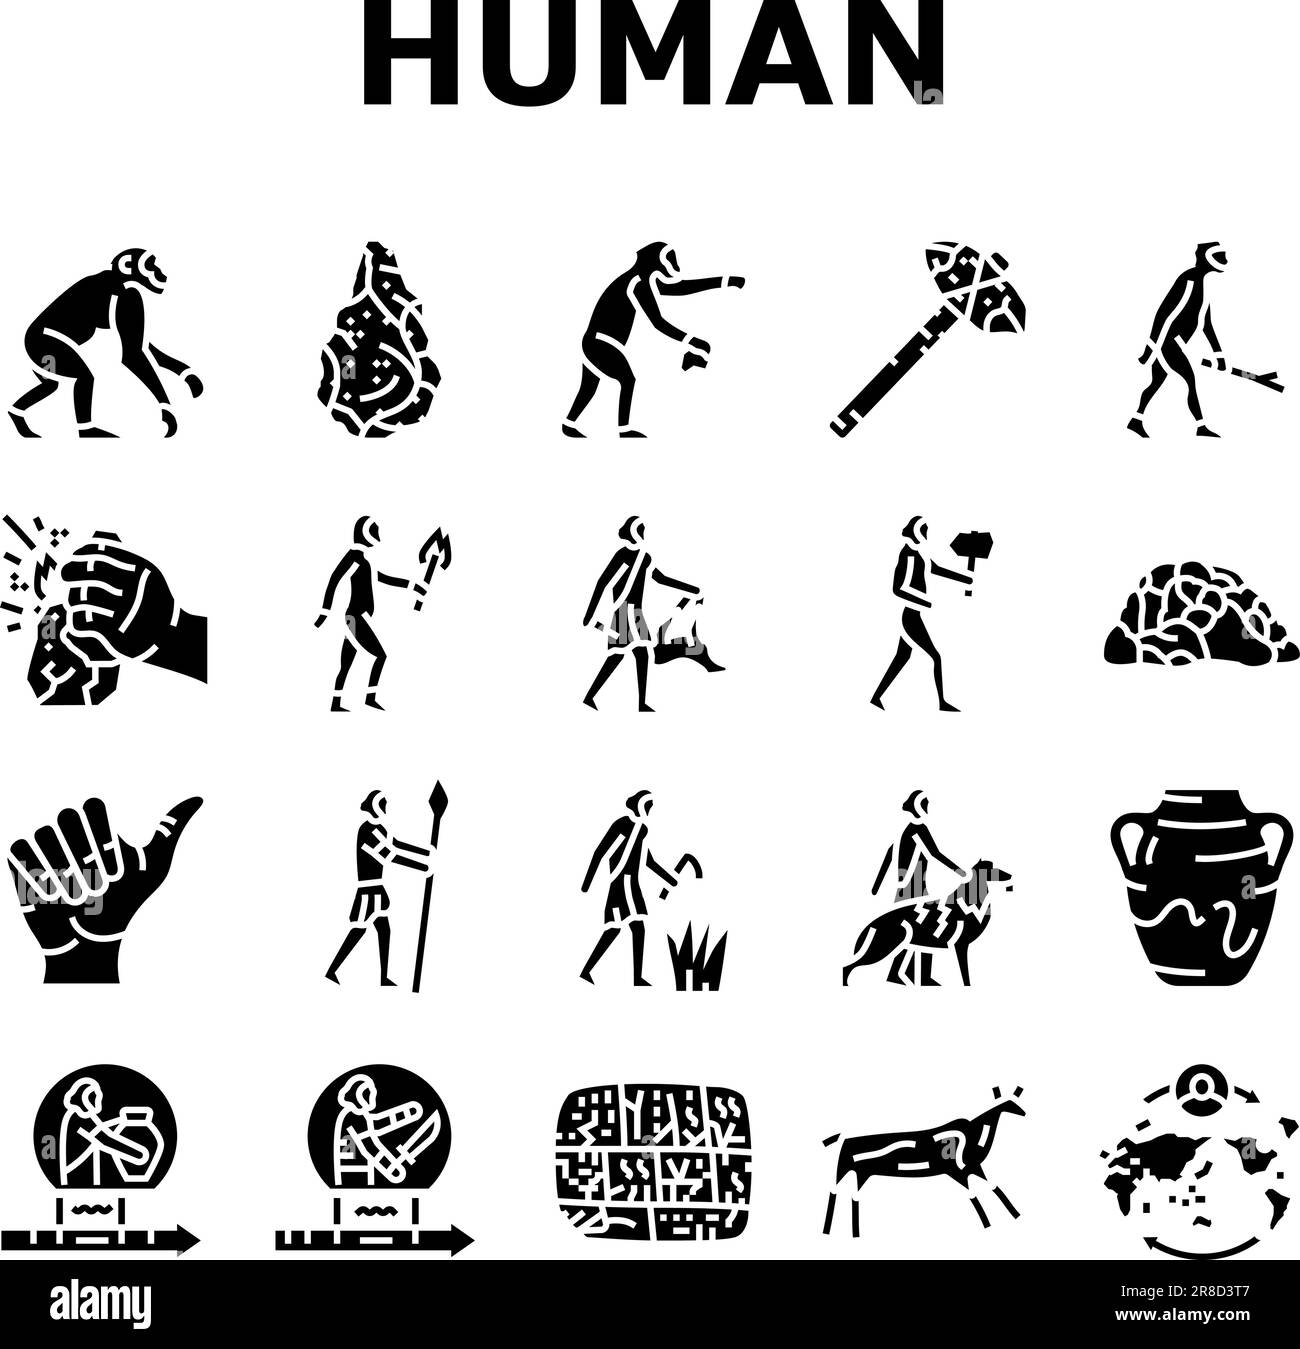 human evolution man caveman icons set vector Stock Vector